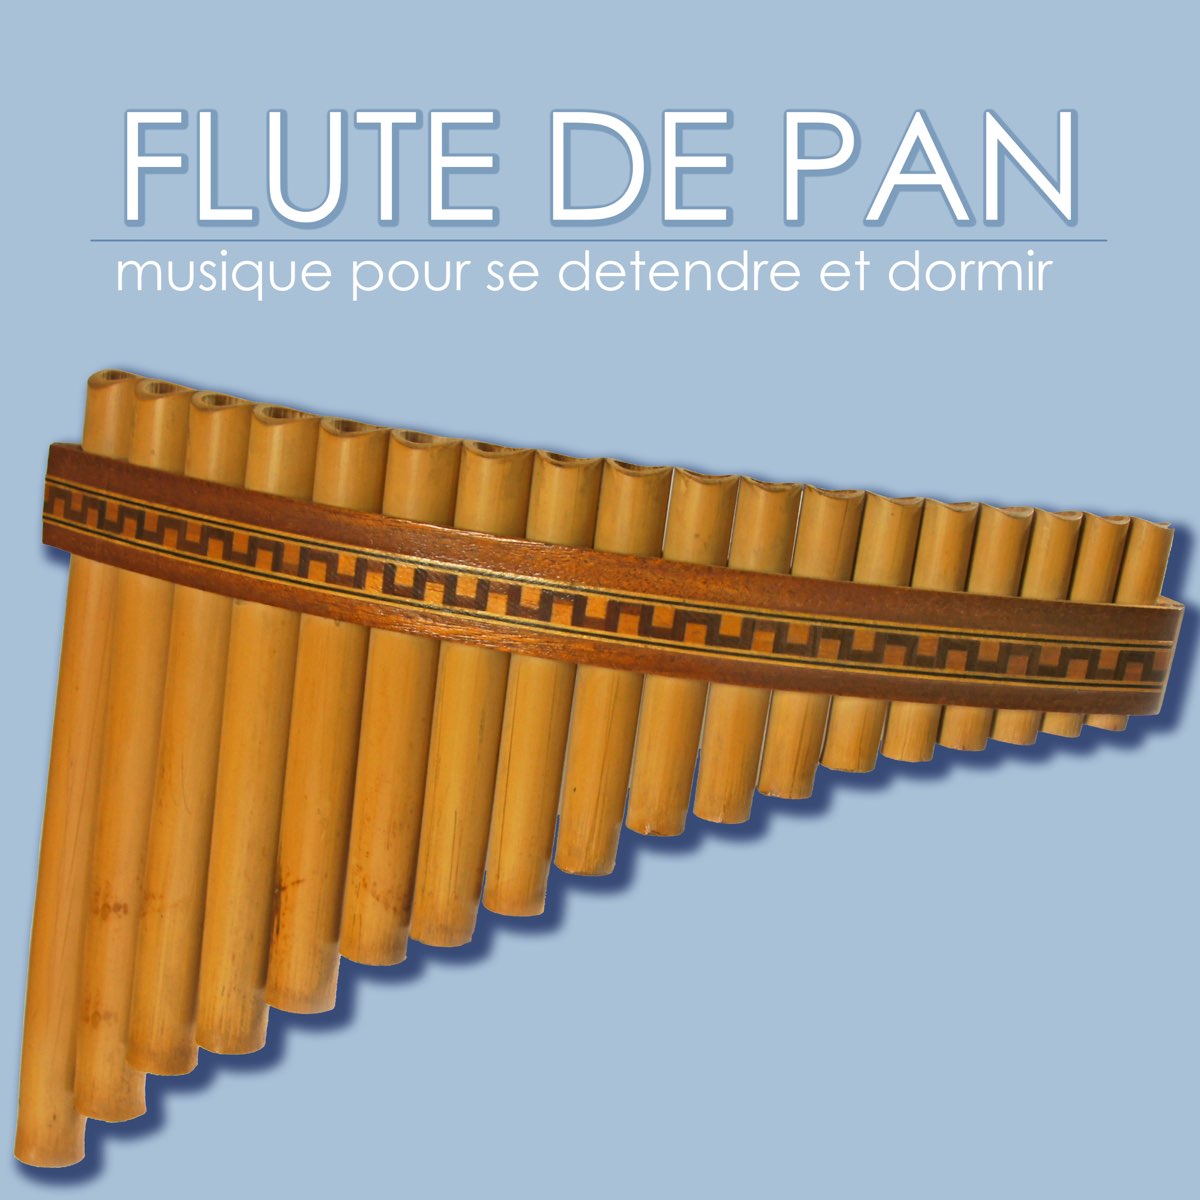 Музыка флейта пана. Флейта пана. Обложка флейта. Флейта пана в живописи. Флейта пана современная.